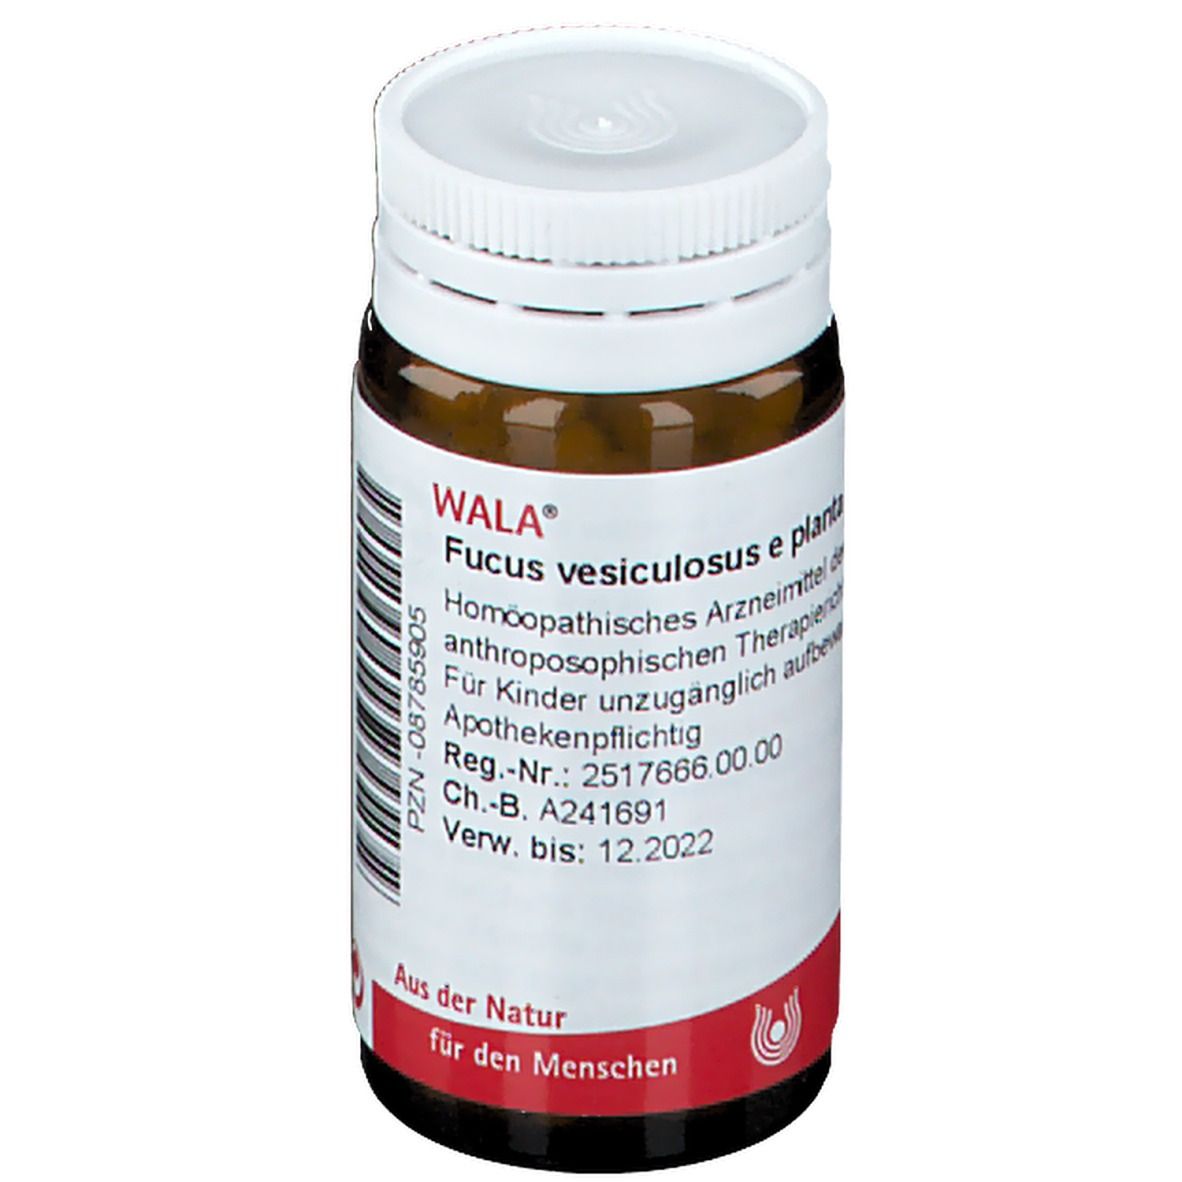 WALA® Fucus vesiculosus e planta tota D 6